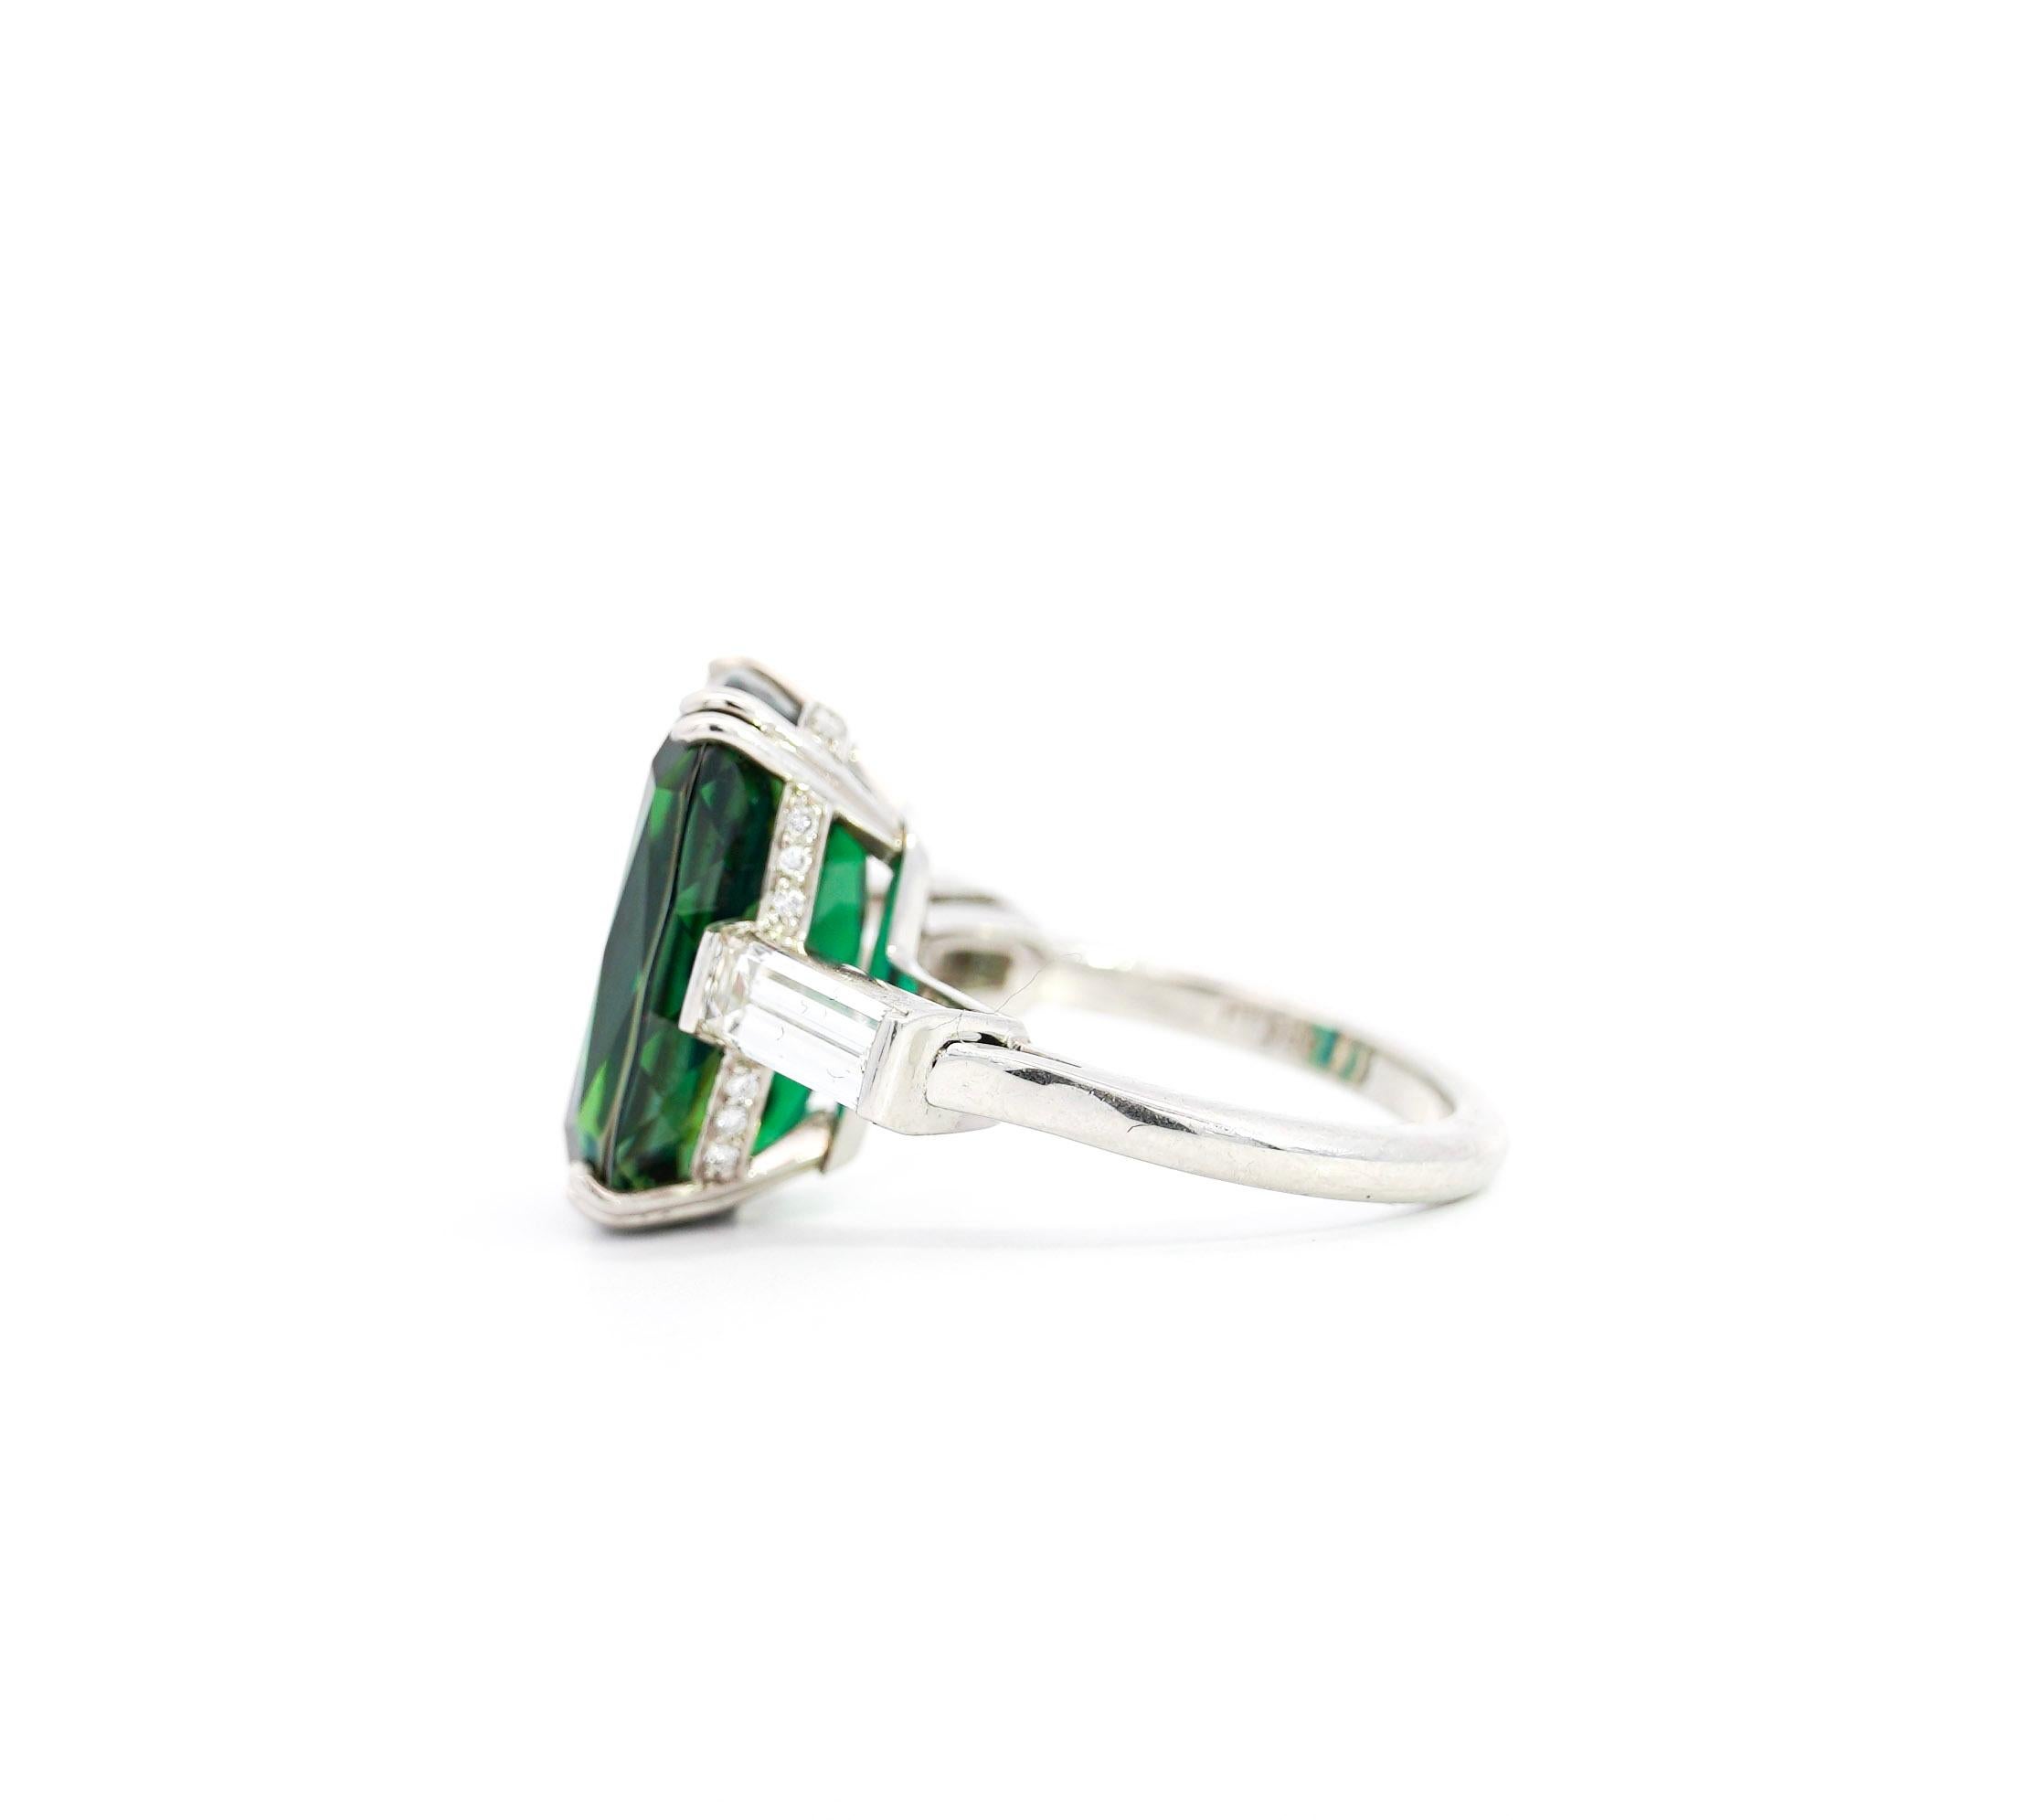 Asscher Cut Rare Green Tanzanite 12.68 Carat Cushion In Platinum 950 & Baguette Diamond Ring For Sale